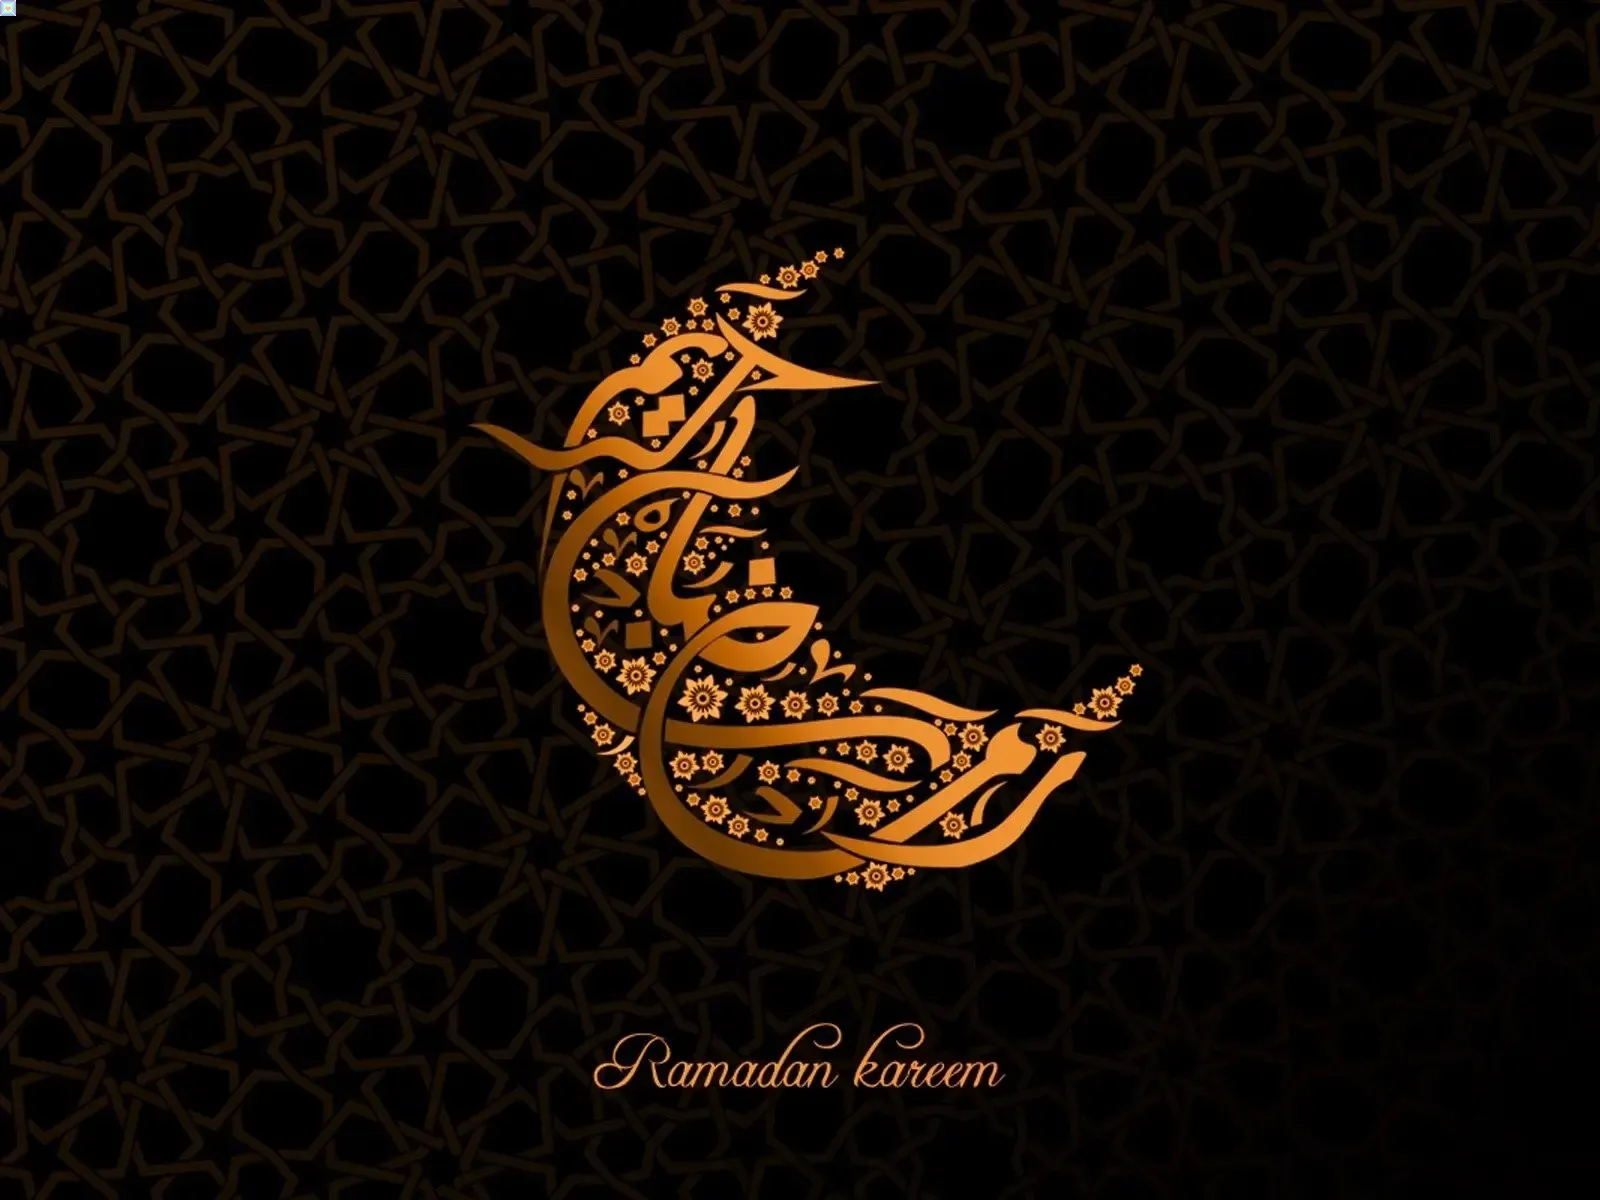 صور خلفيات رمضان كريم 1442 - خلفيات رمضانية ٢٠٢١